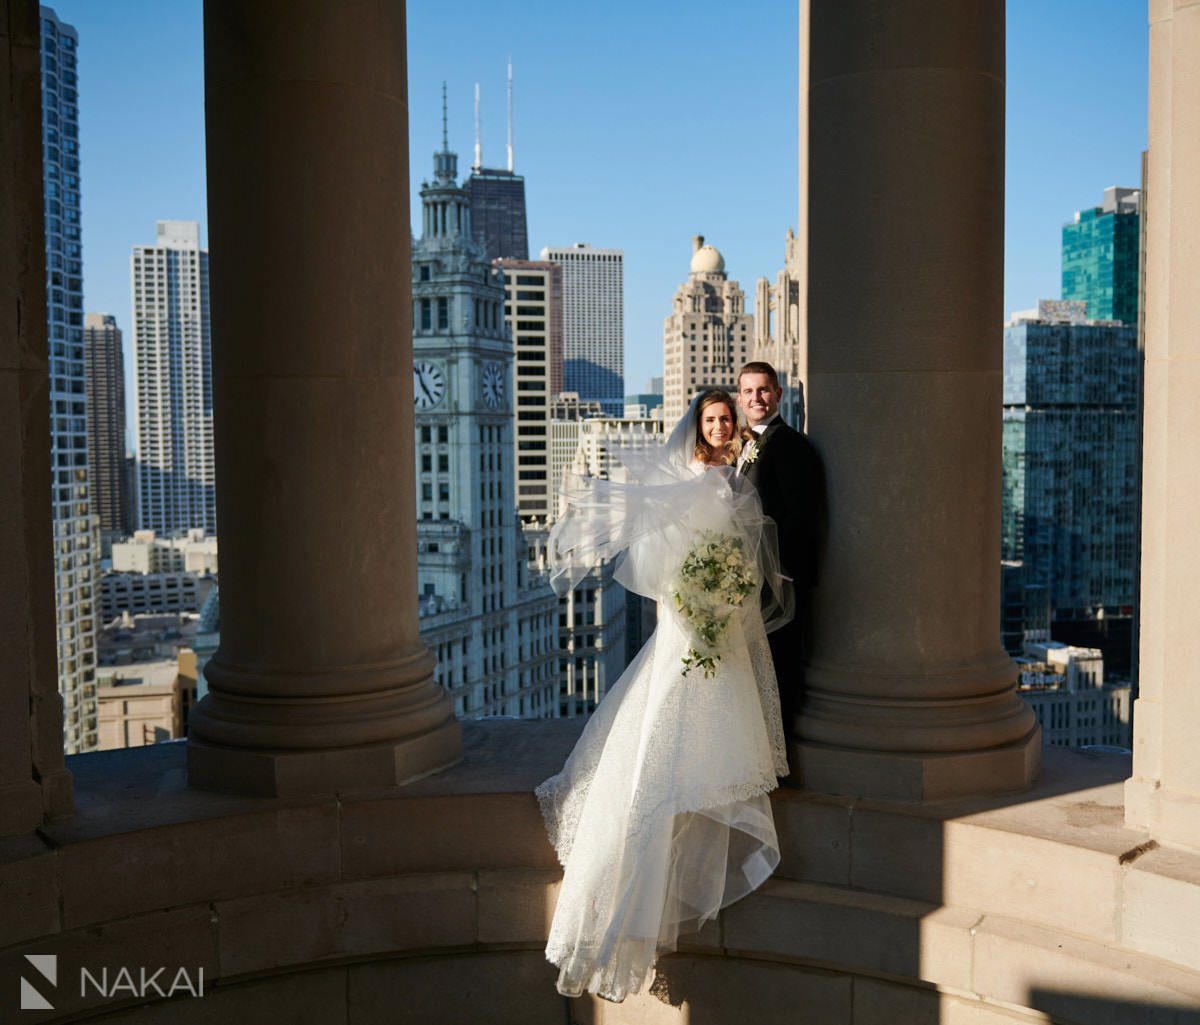 Chicago LondonHouse wedding photographer cupola bride groom